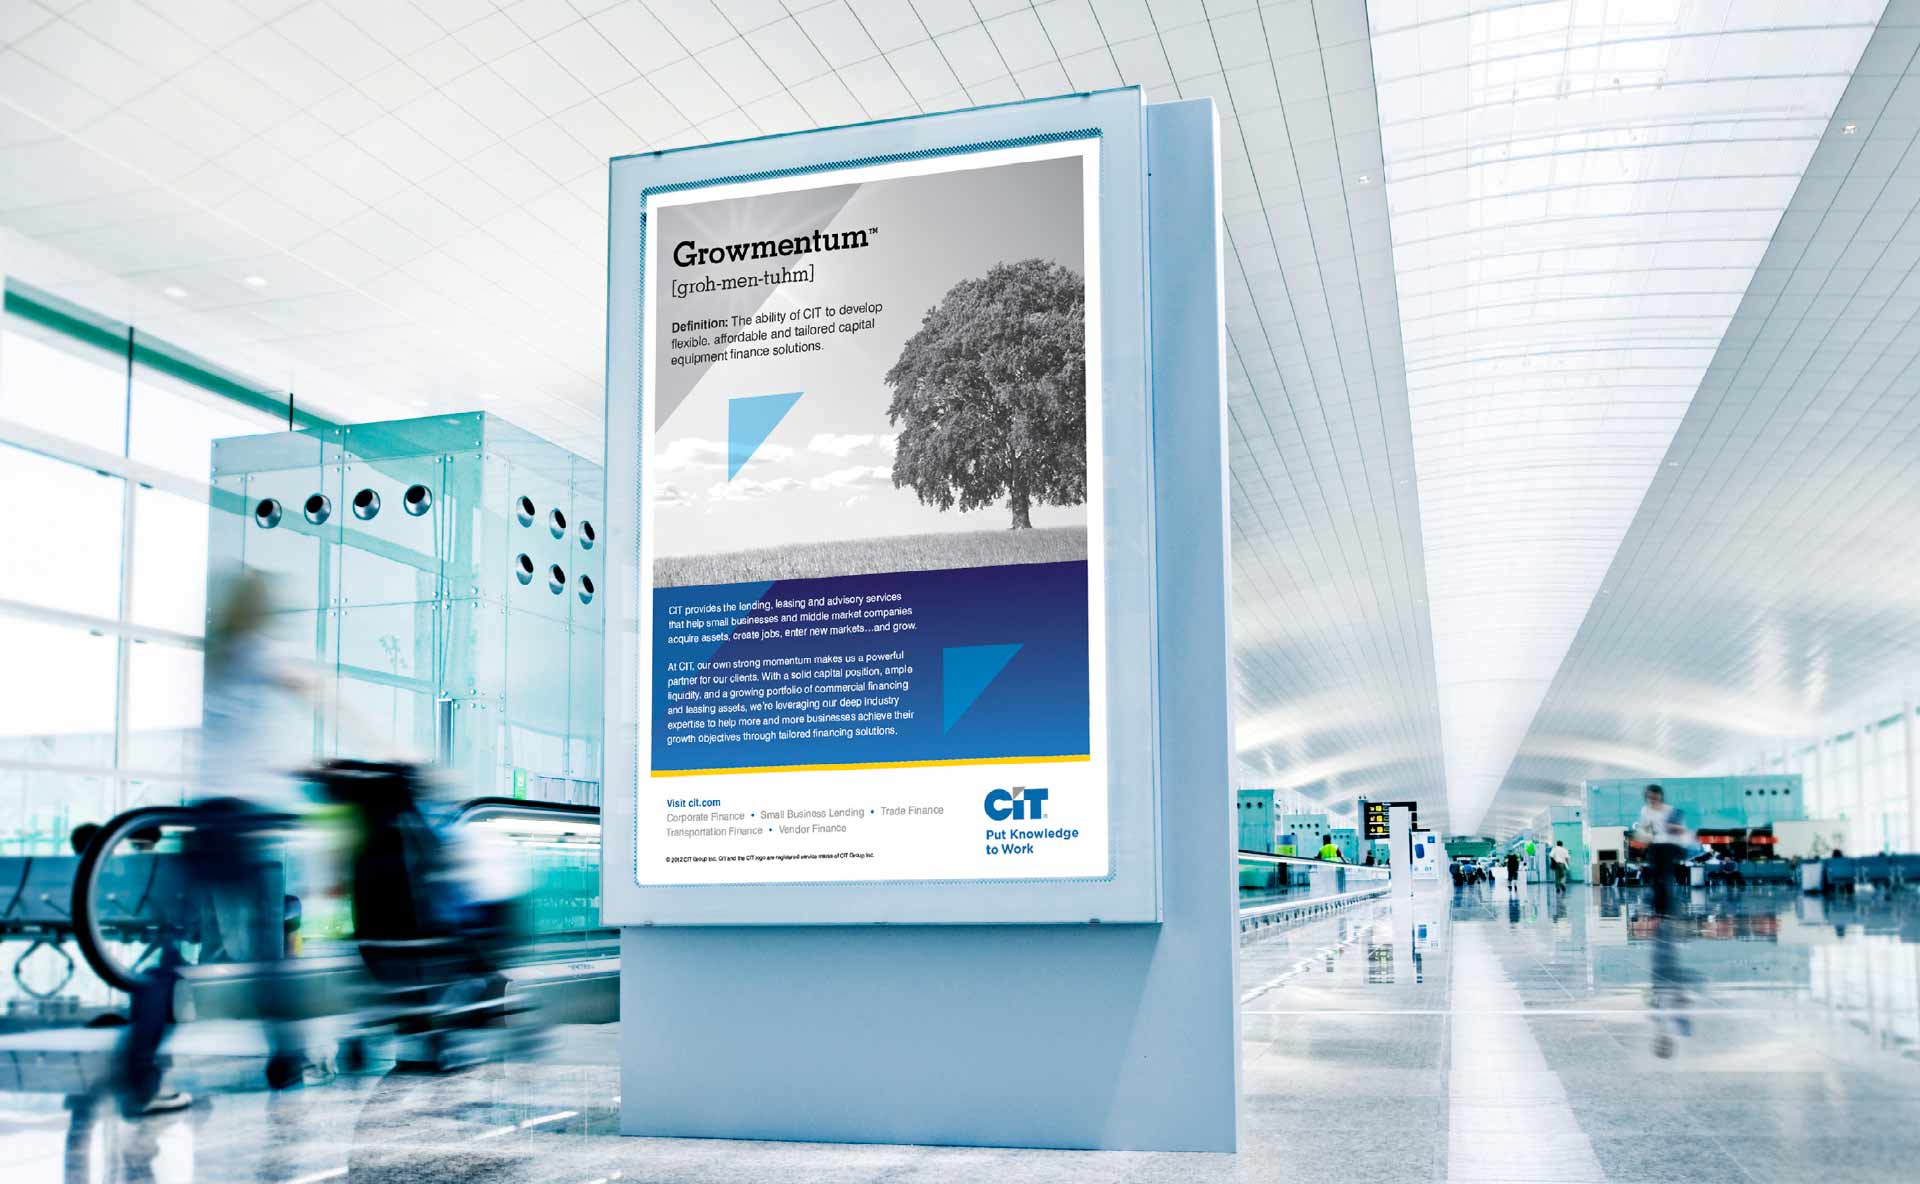 CIT airport poster billboard advertisement